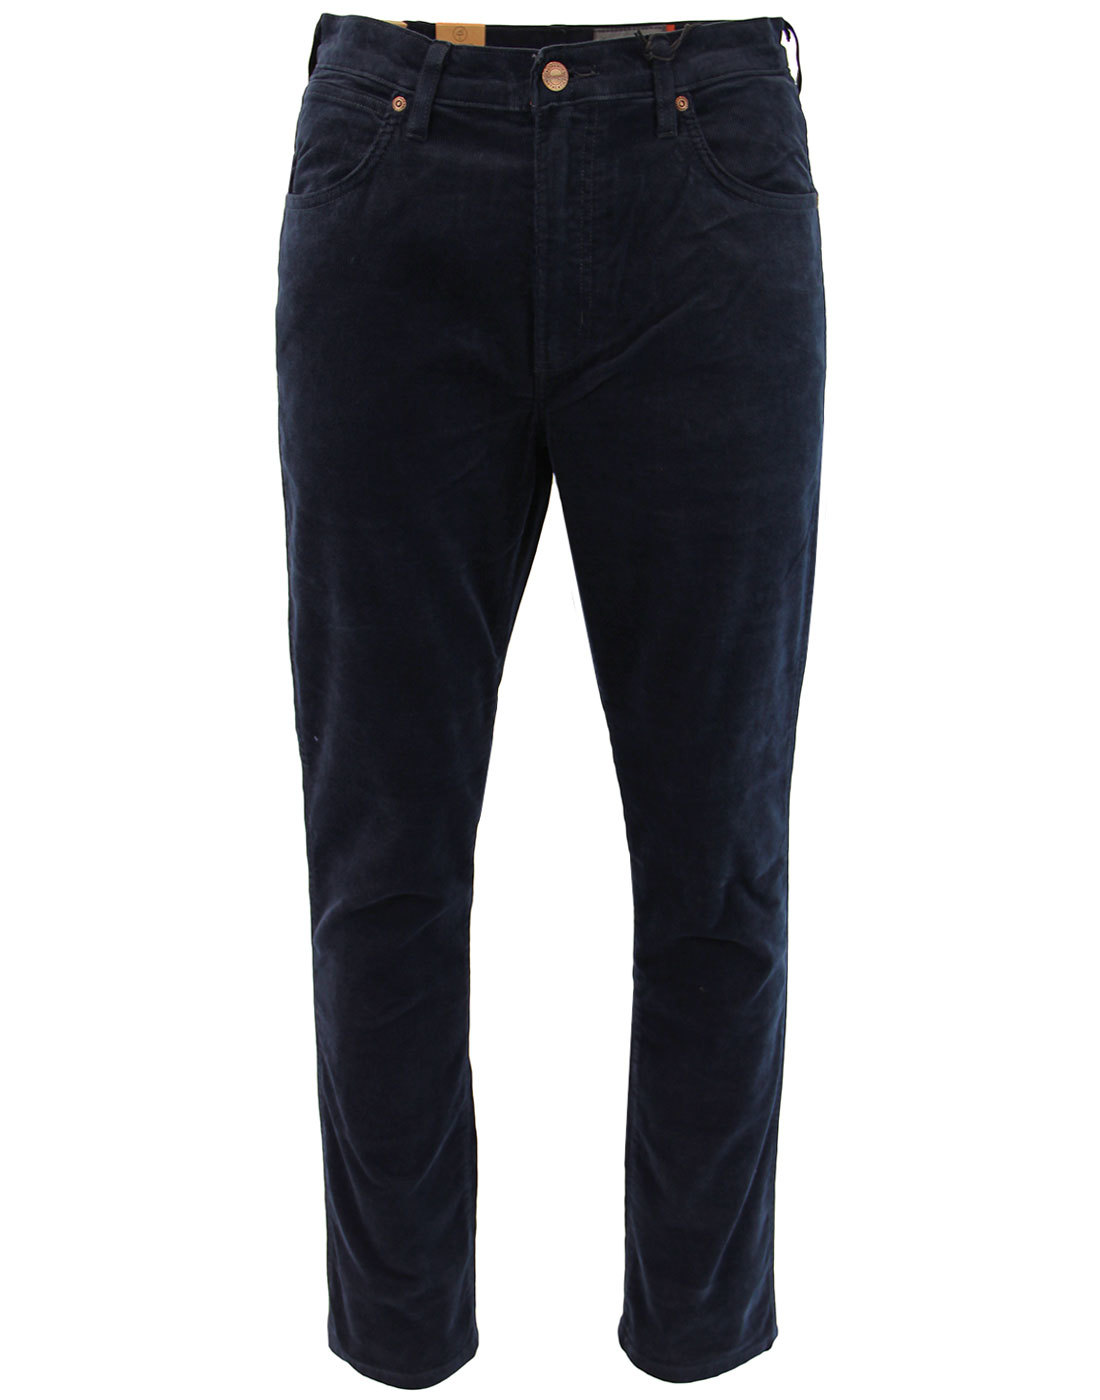 wrangler arizona cord jeans